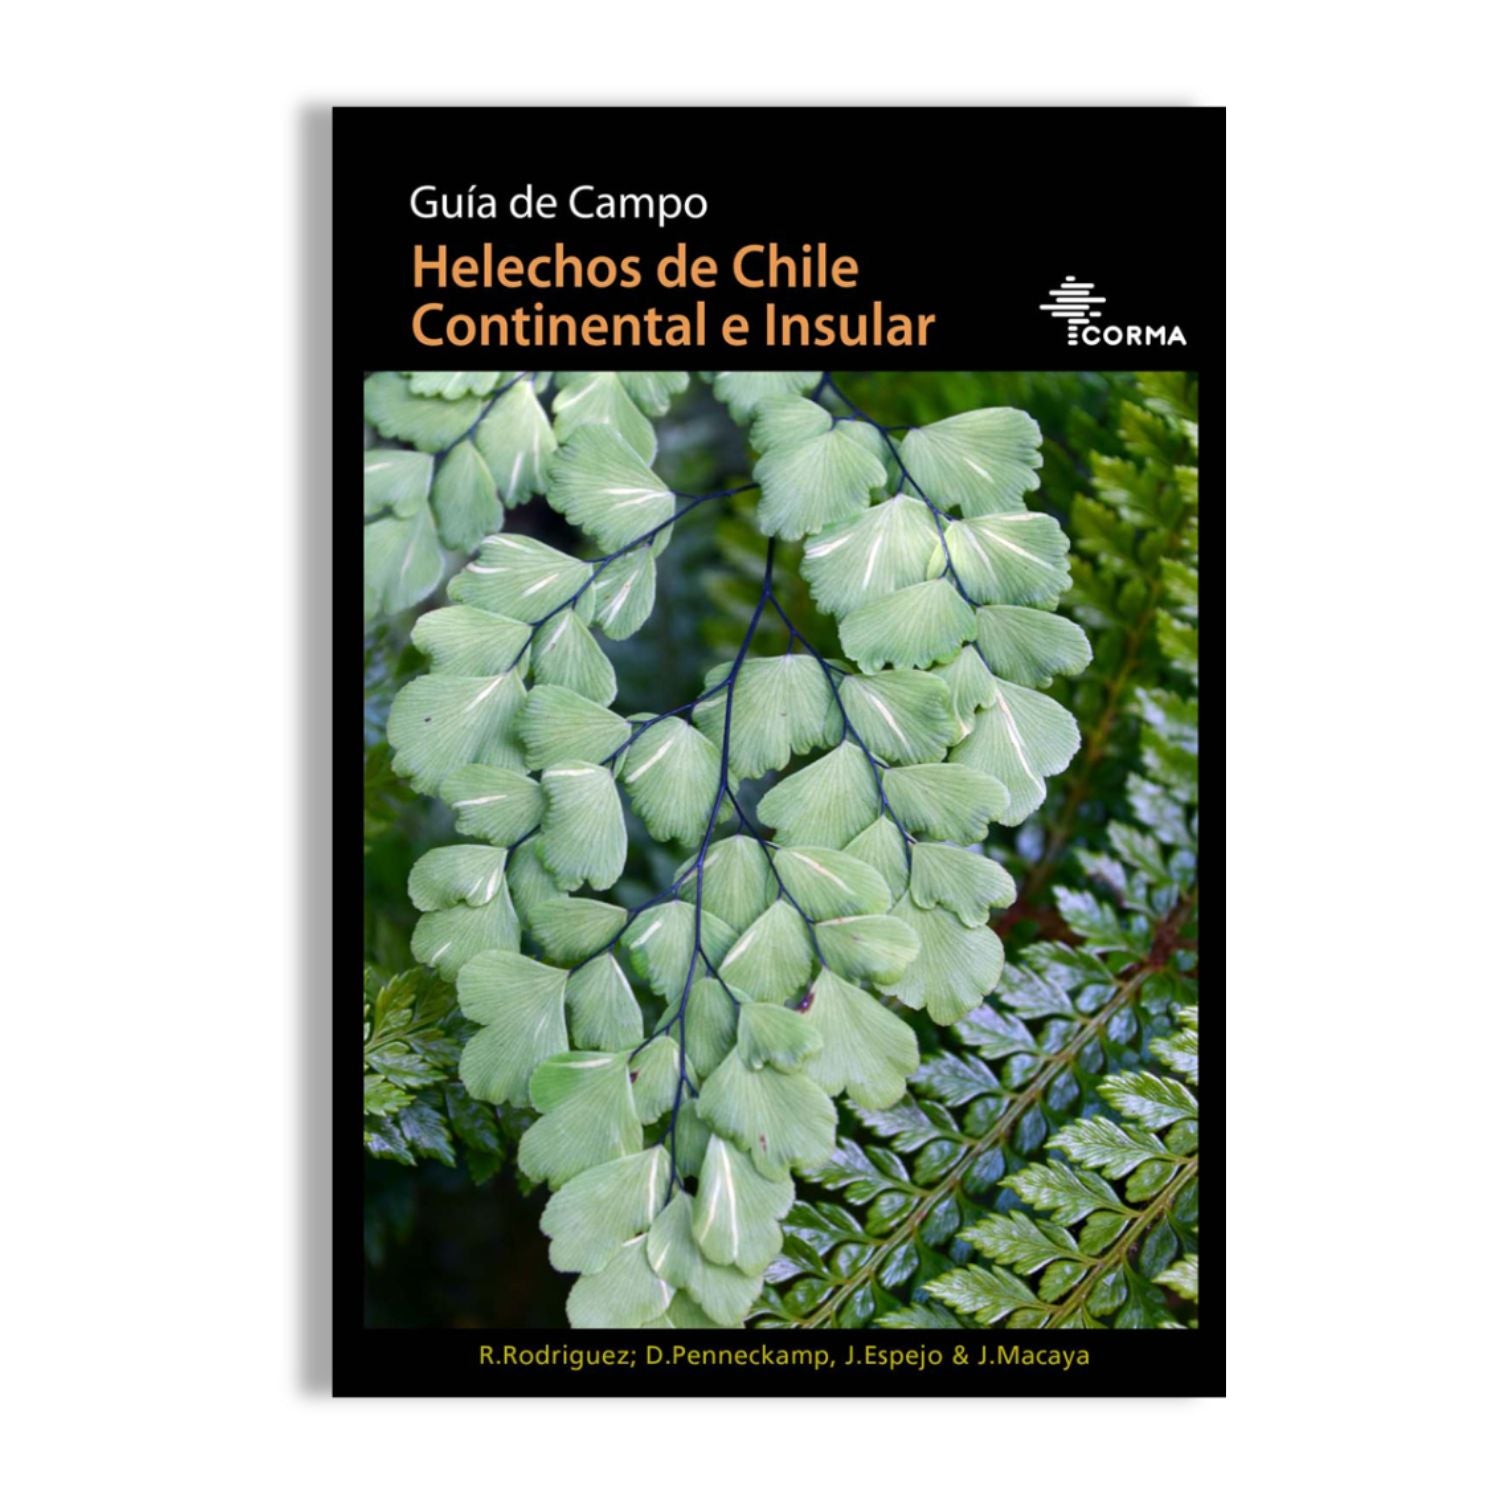 Helechos de Chile continental e insular